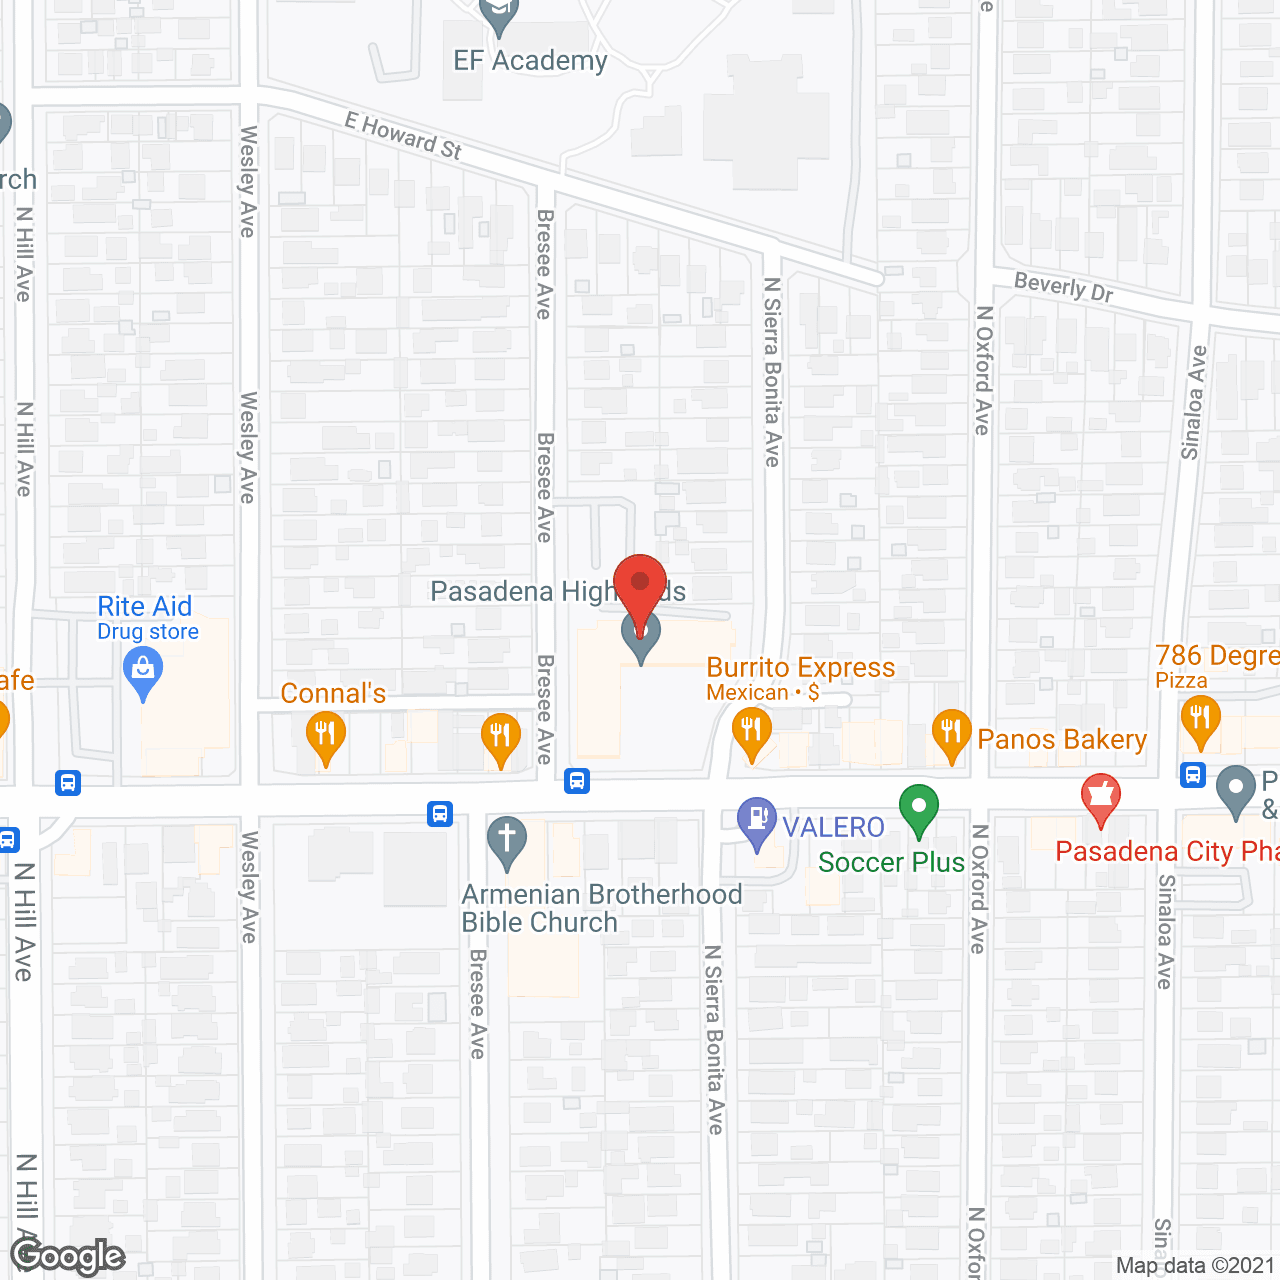 Pasadena Highlands in google map